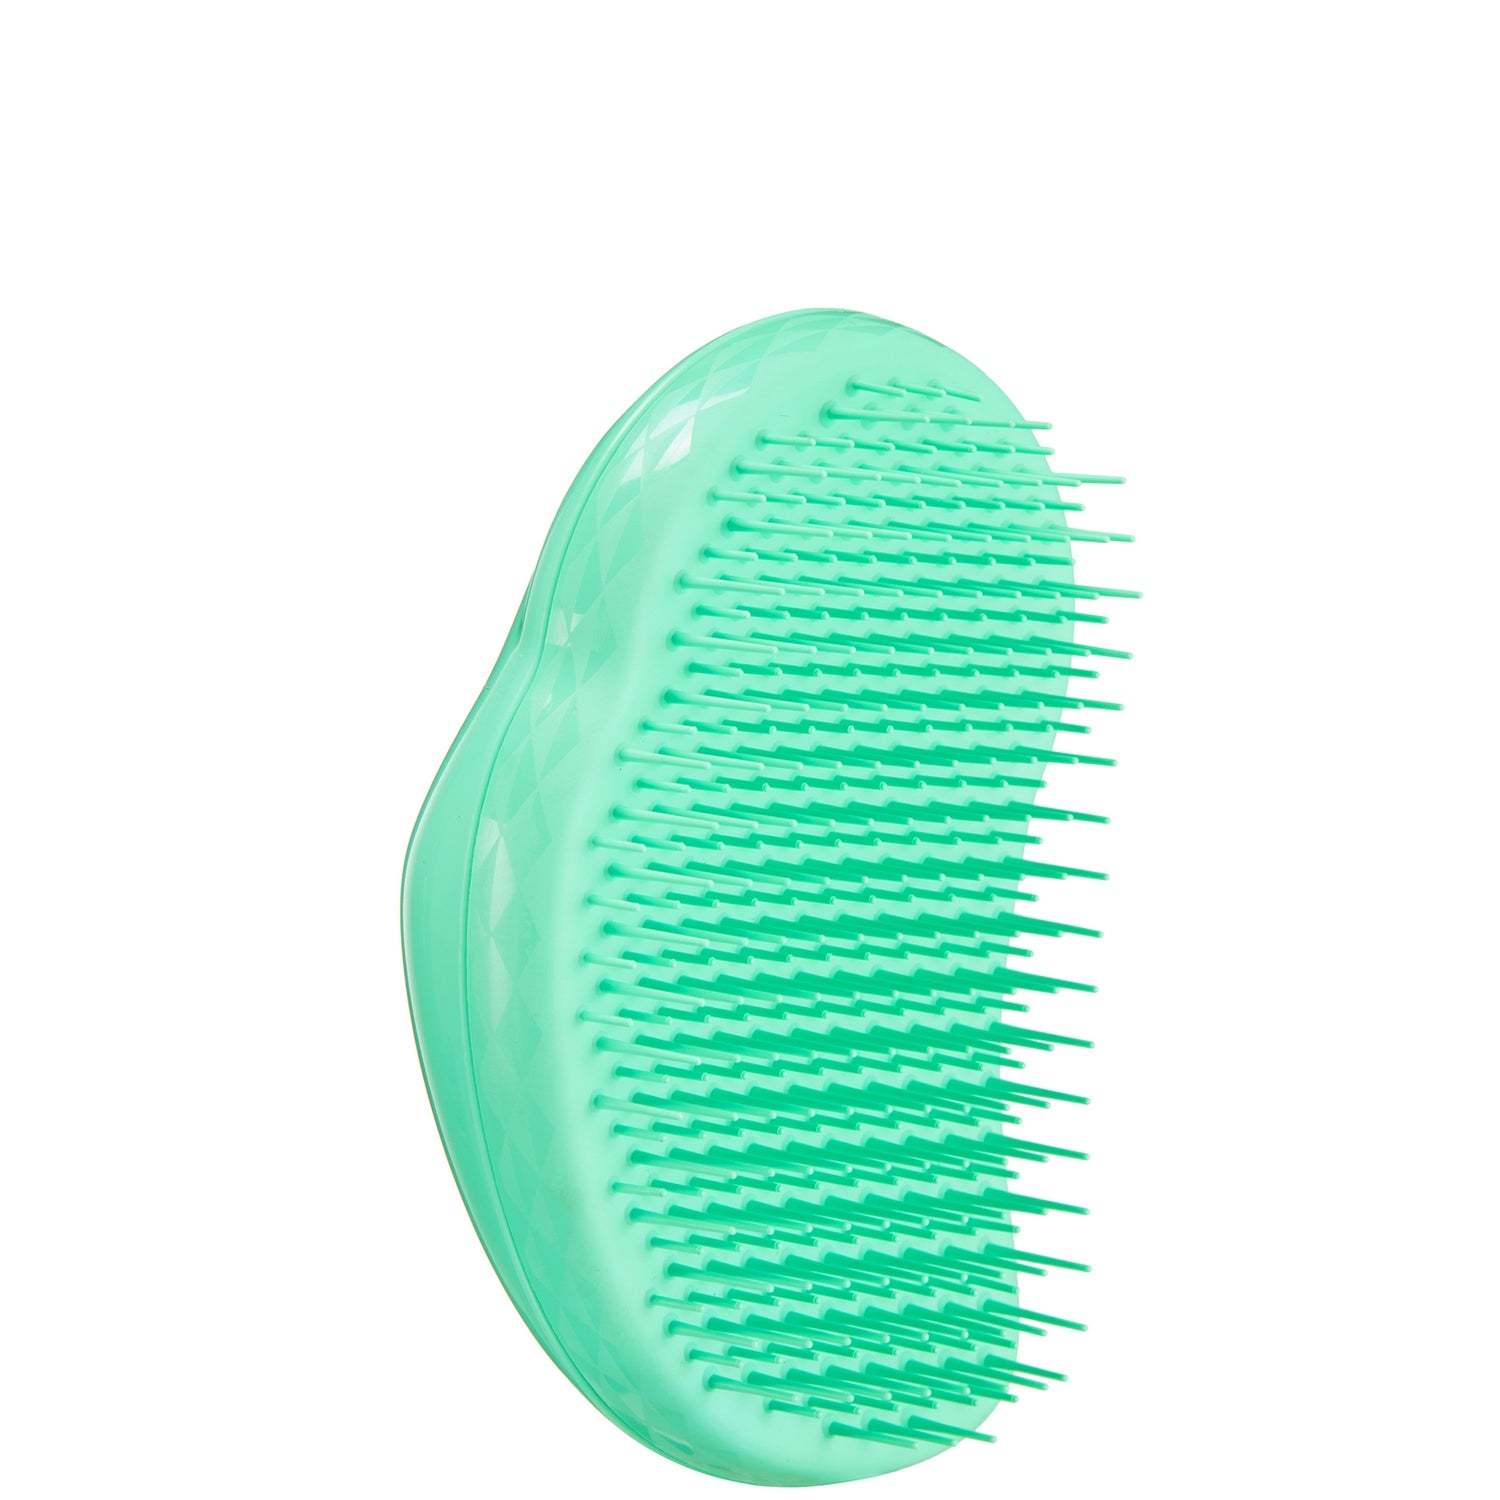 L'originale spazzola antinodi per capelli Tangle Teezer- verde tropicale